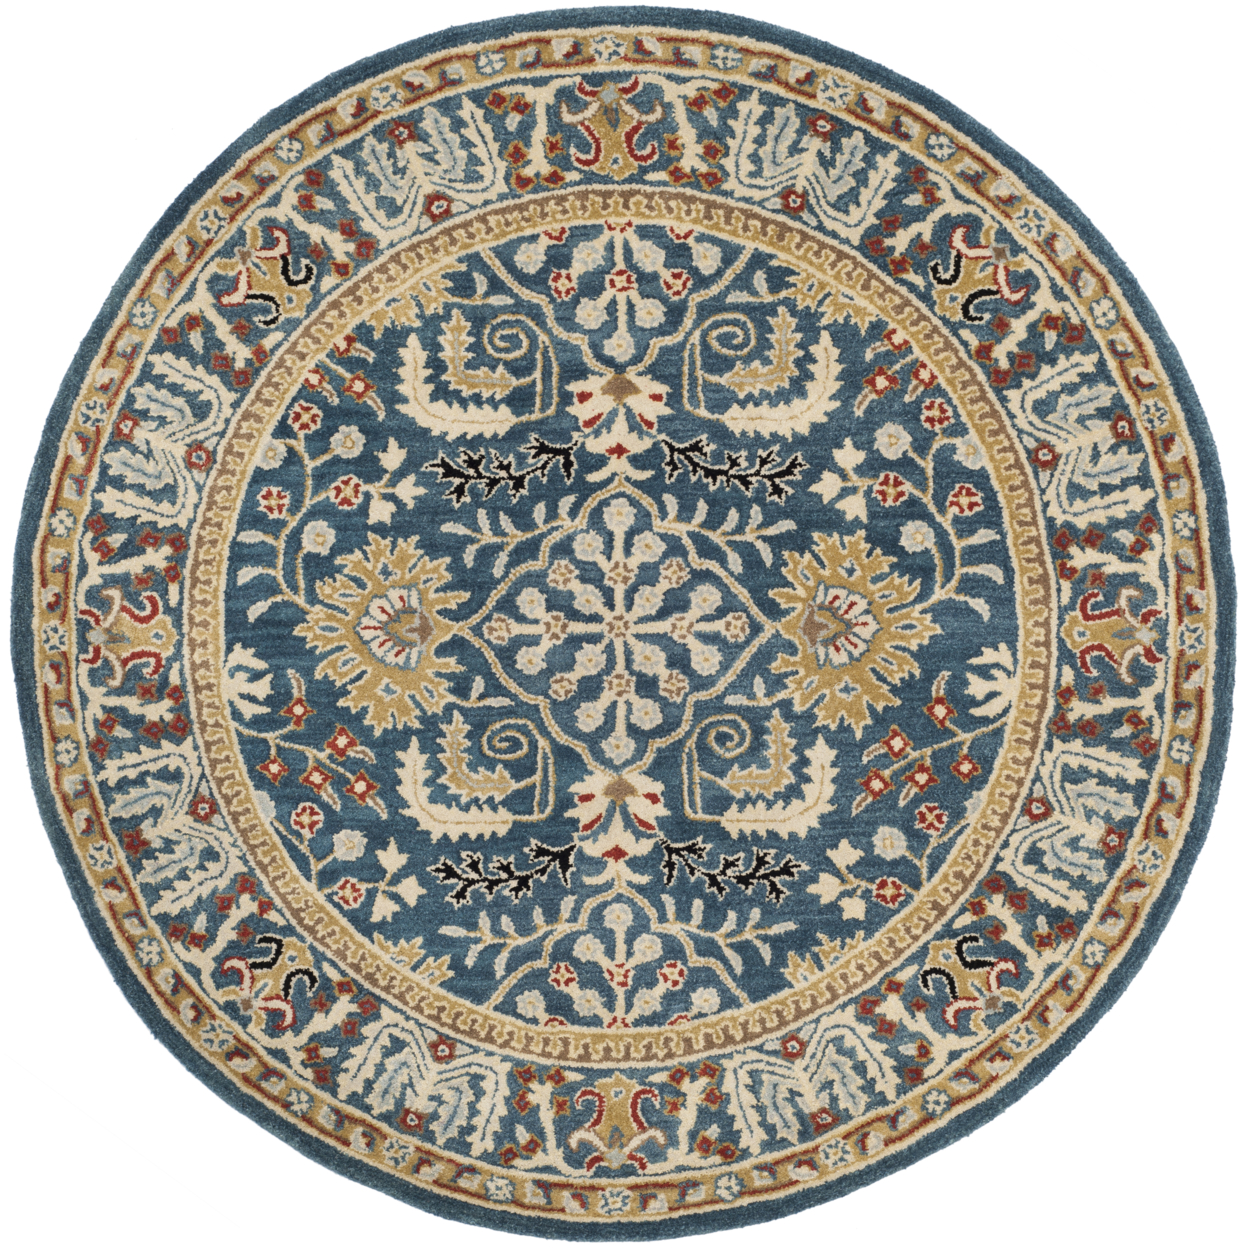 SAFAVIEH AT64B Antiquity Dark Blue / Multi - 8' Round